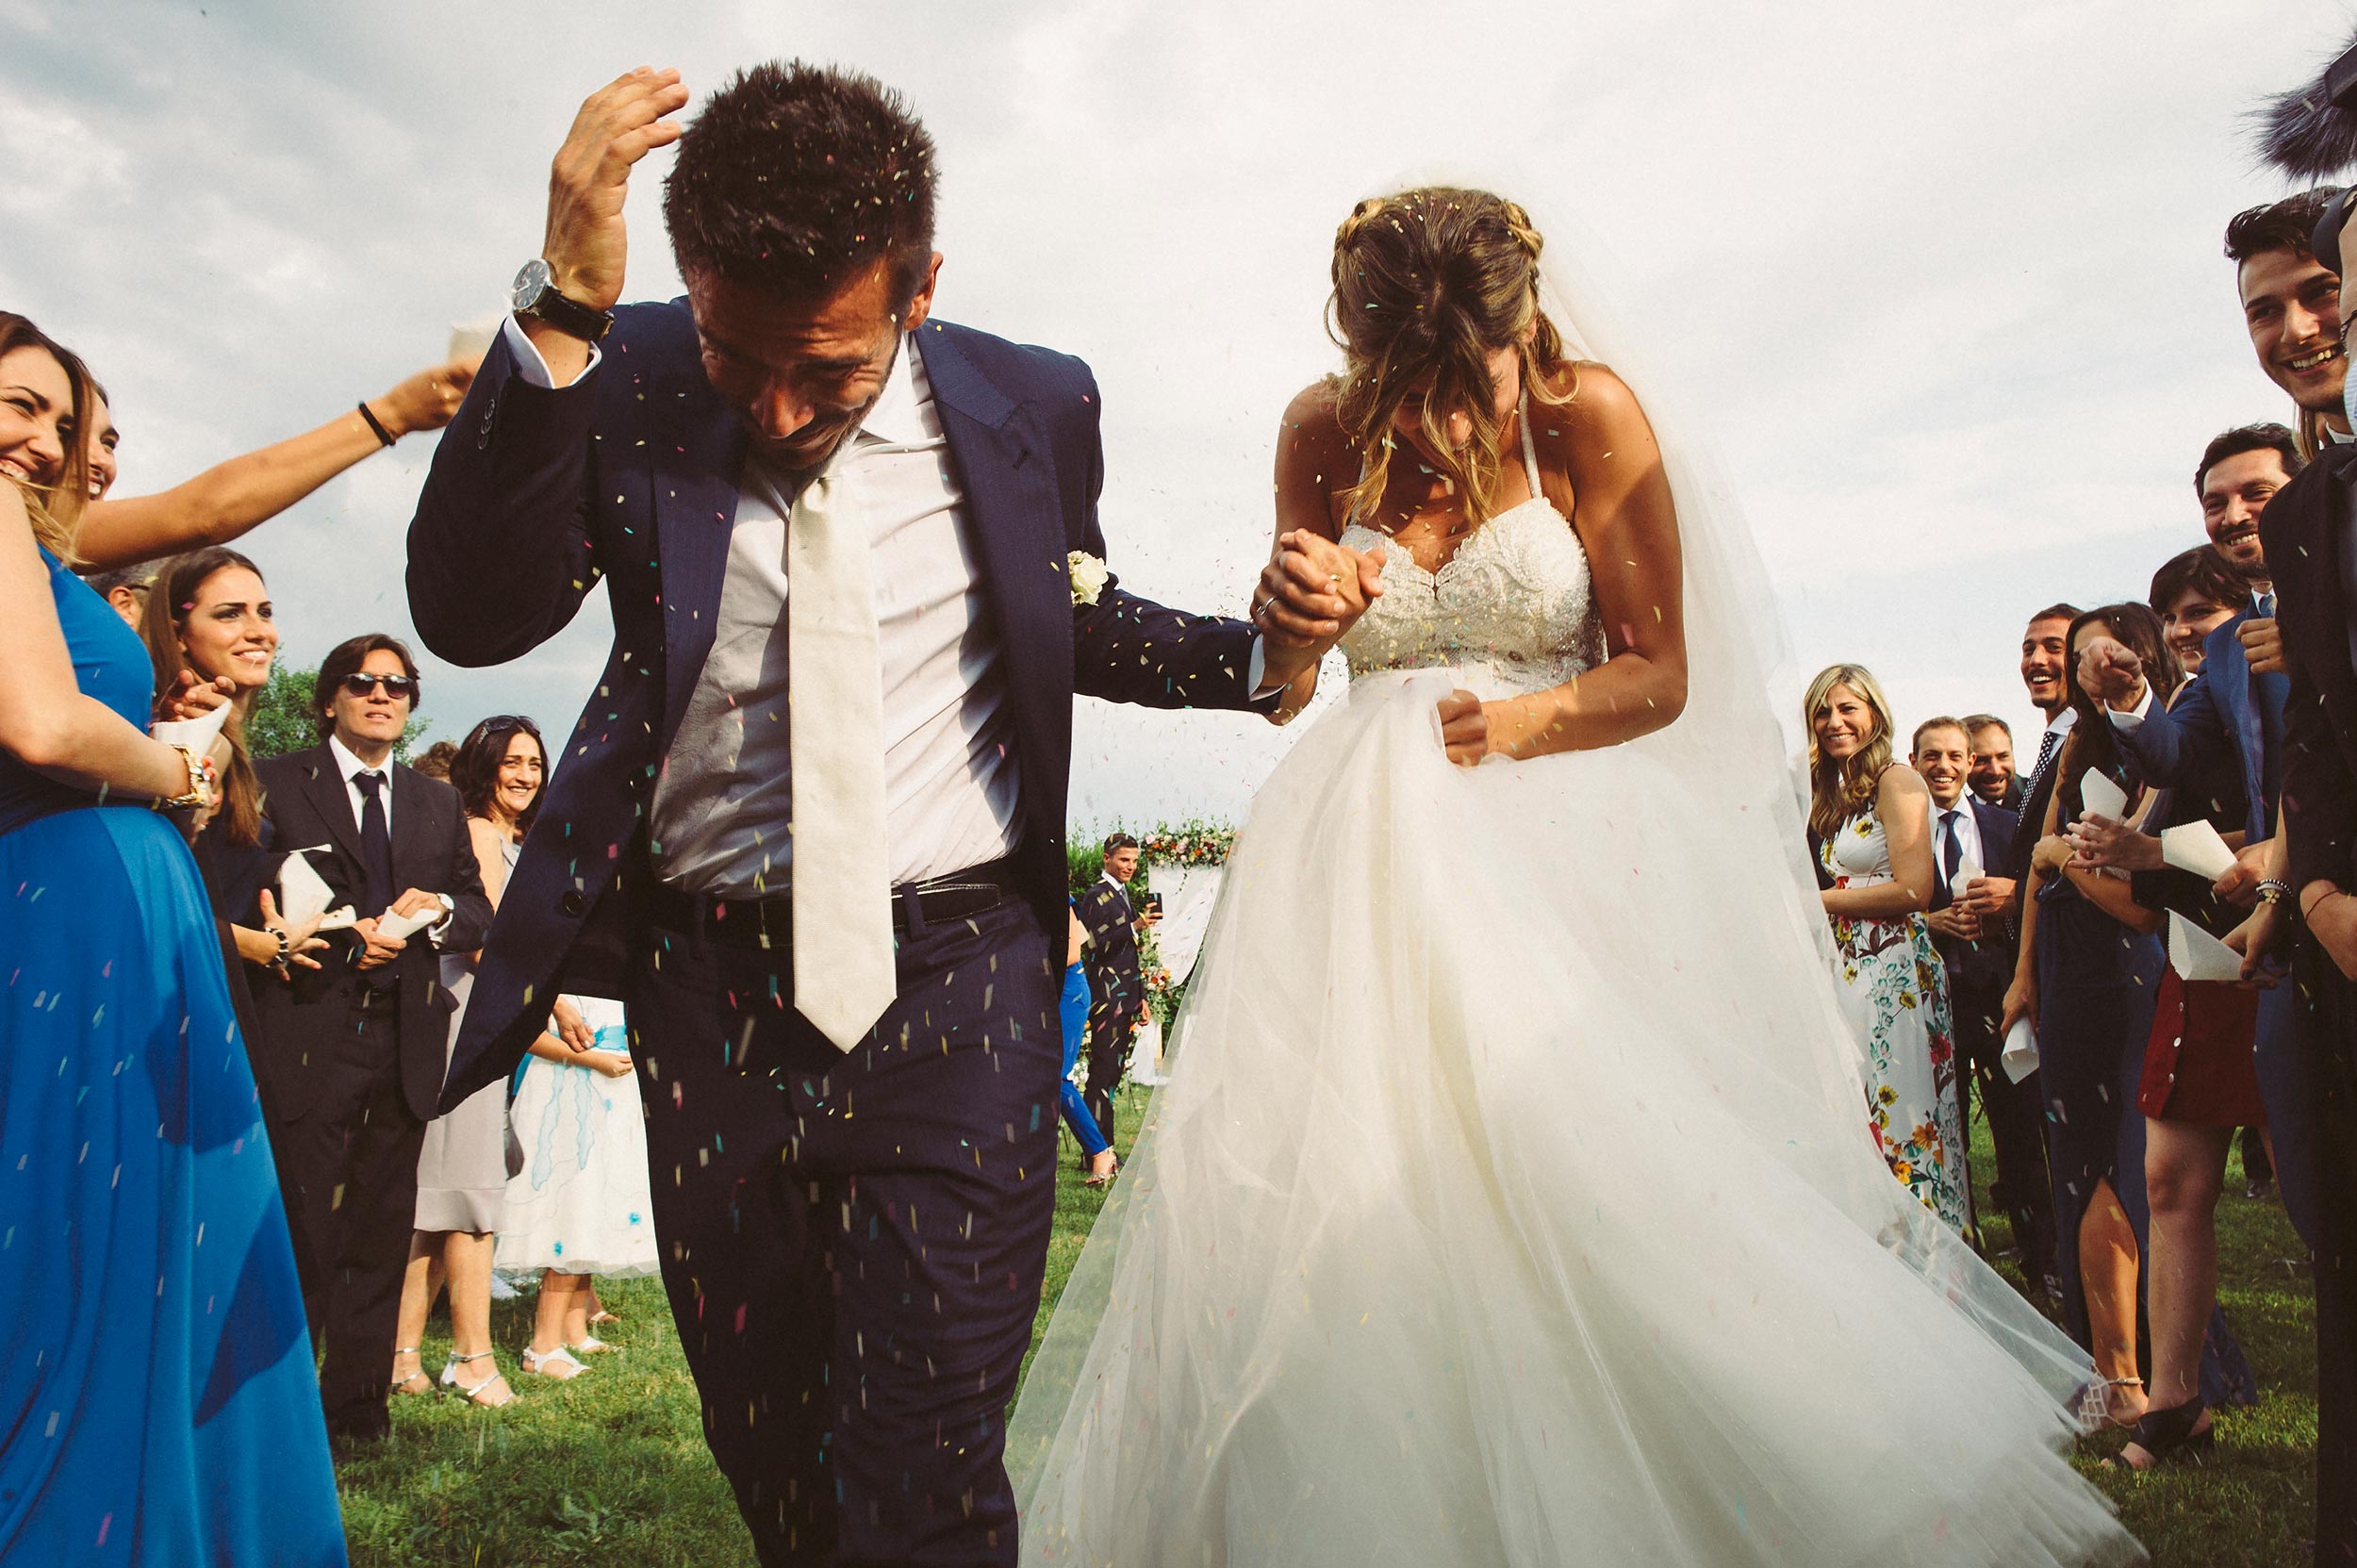 wedding-ceremony-garden-italy-bride-and-groom-running-confetti-rice-documentary-wedding-photography-by-Alessandro-Avenali.jpg